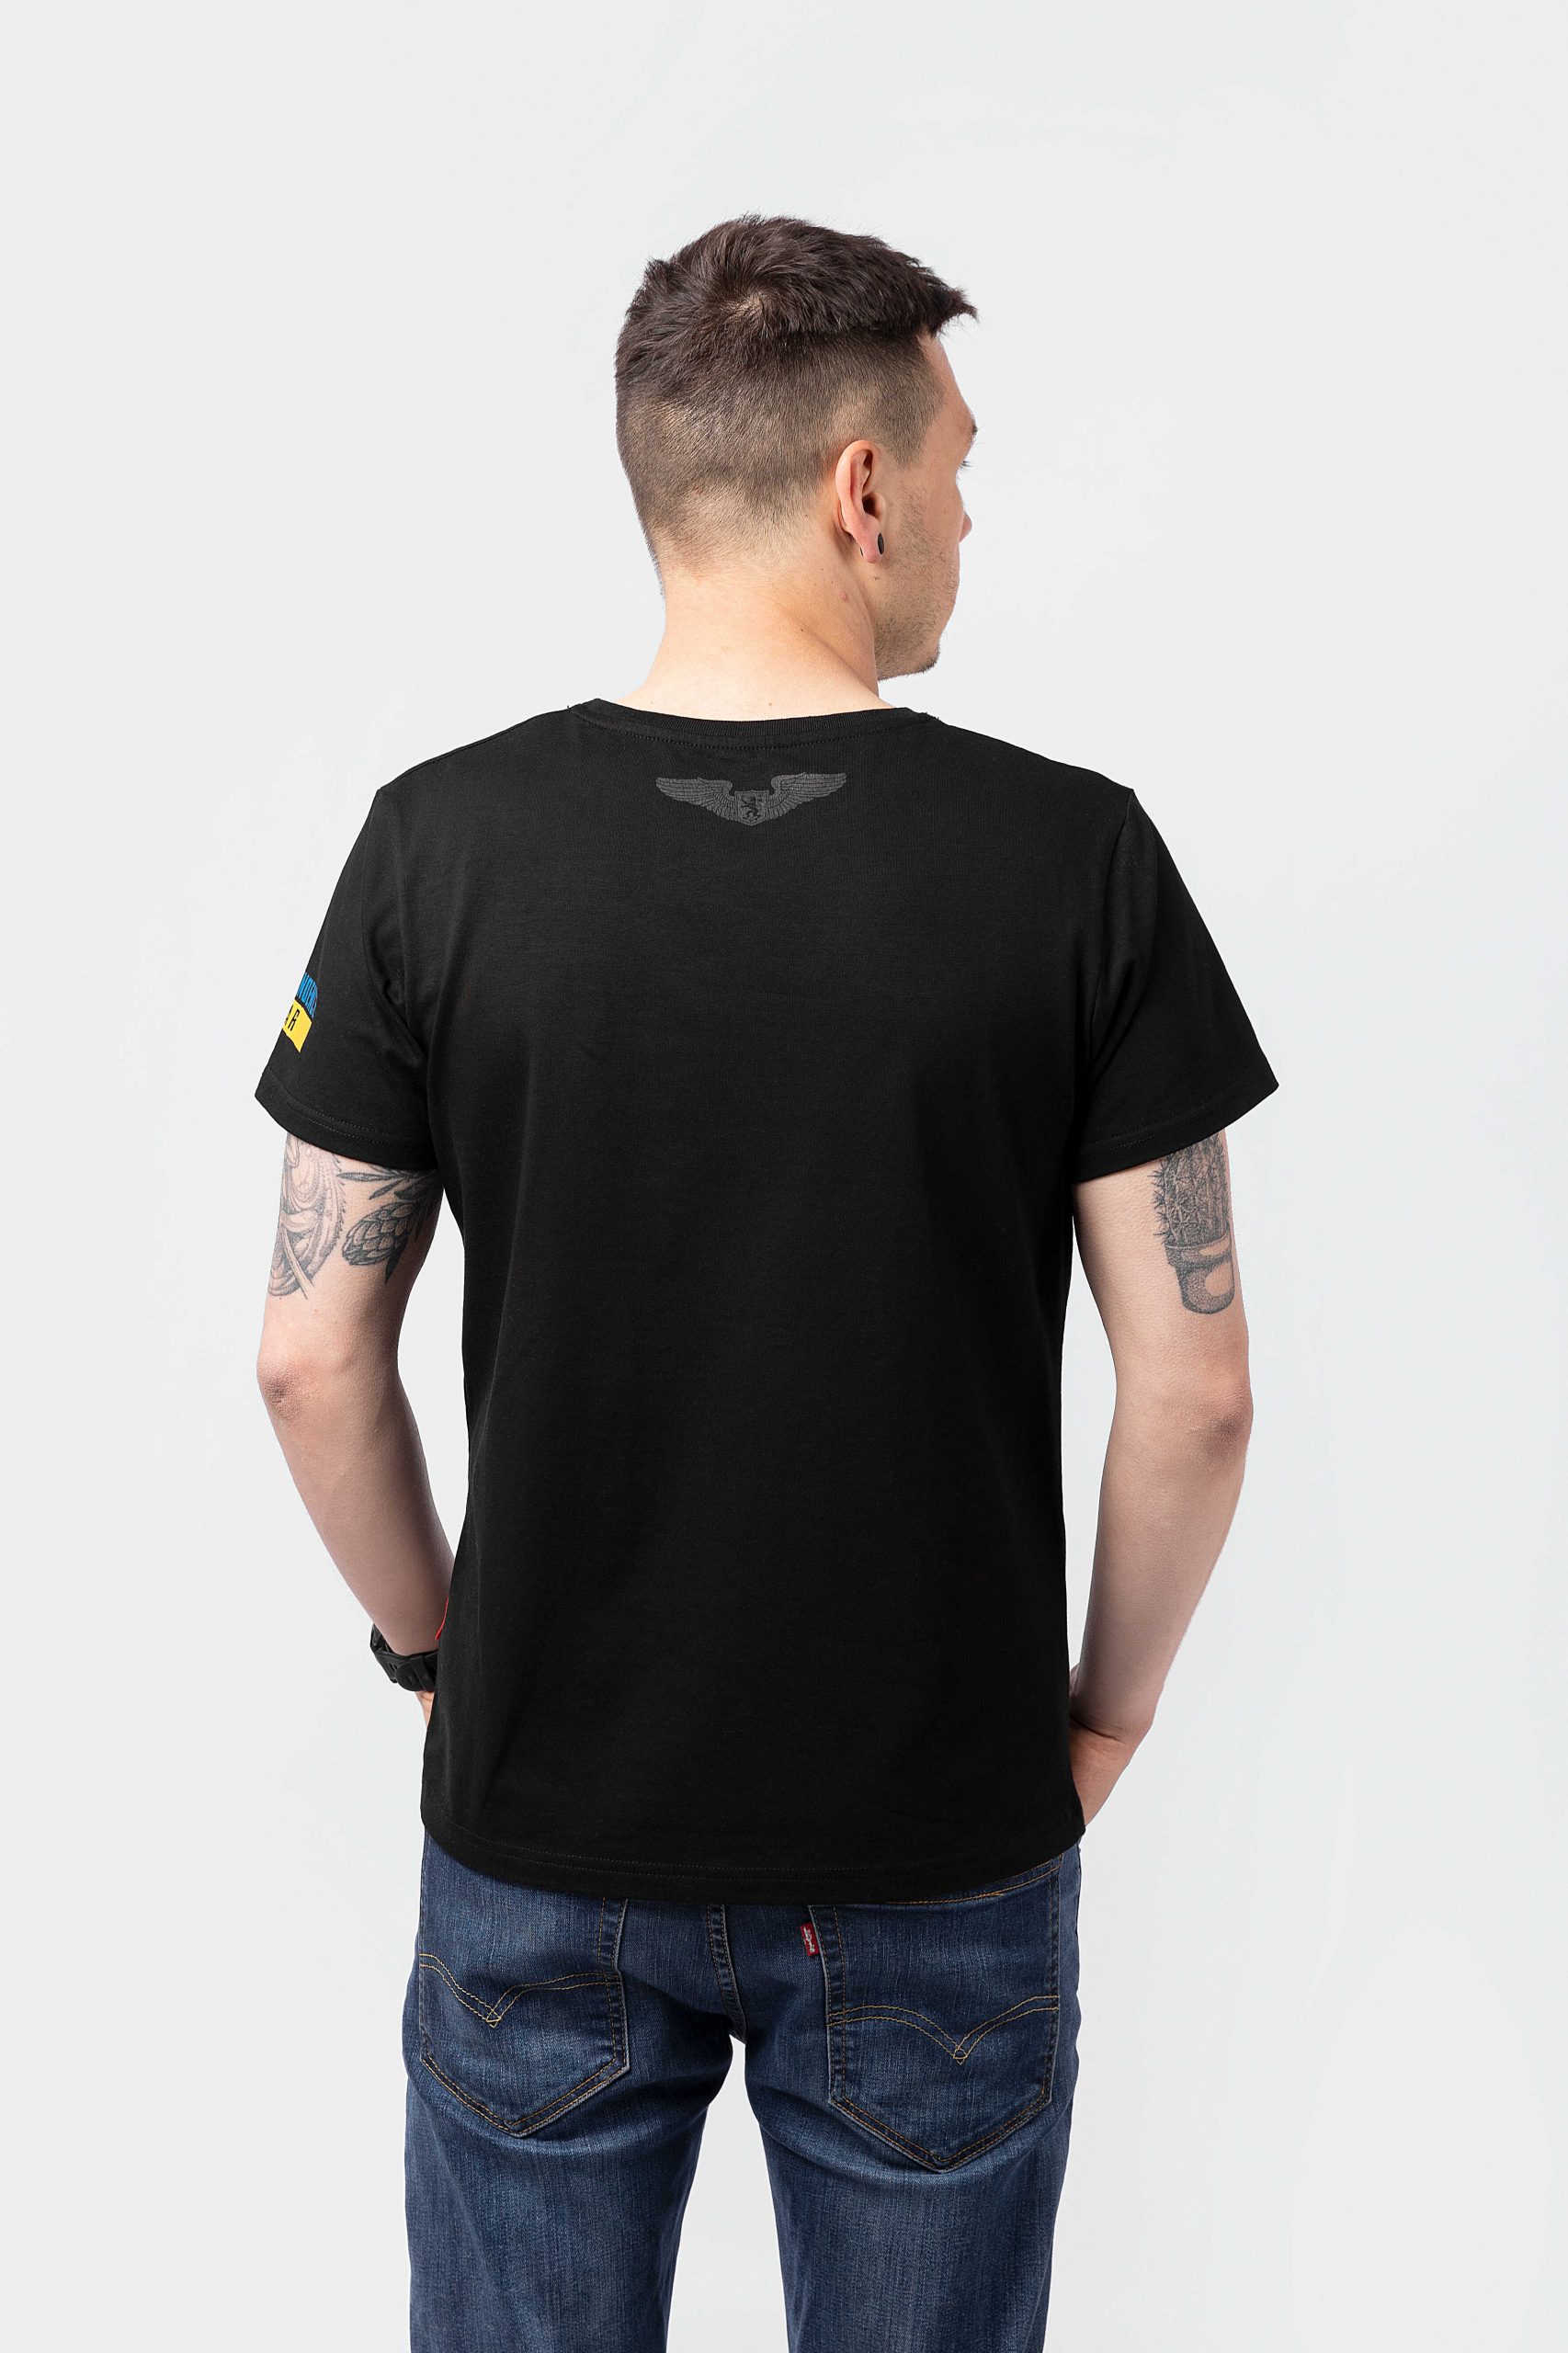 Men's T-Shirt Tank. Color black. 1.